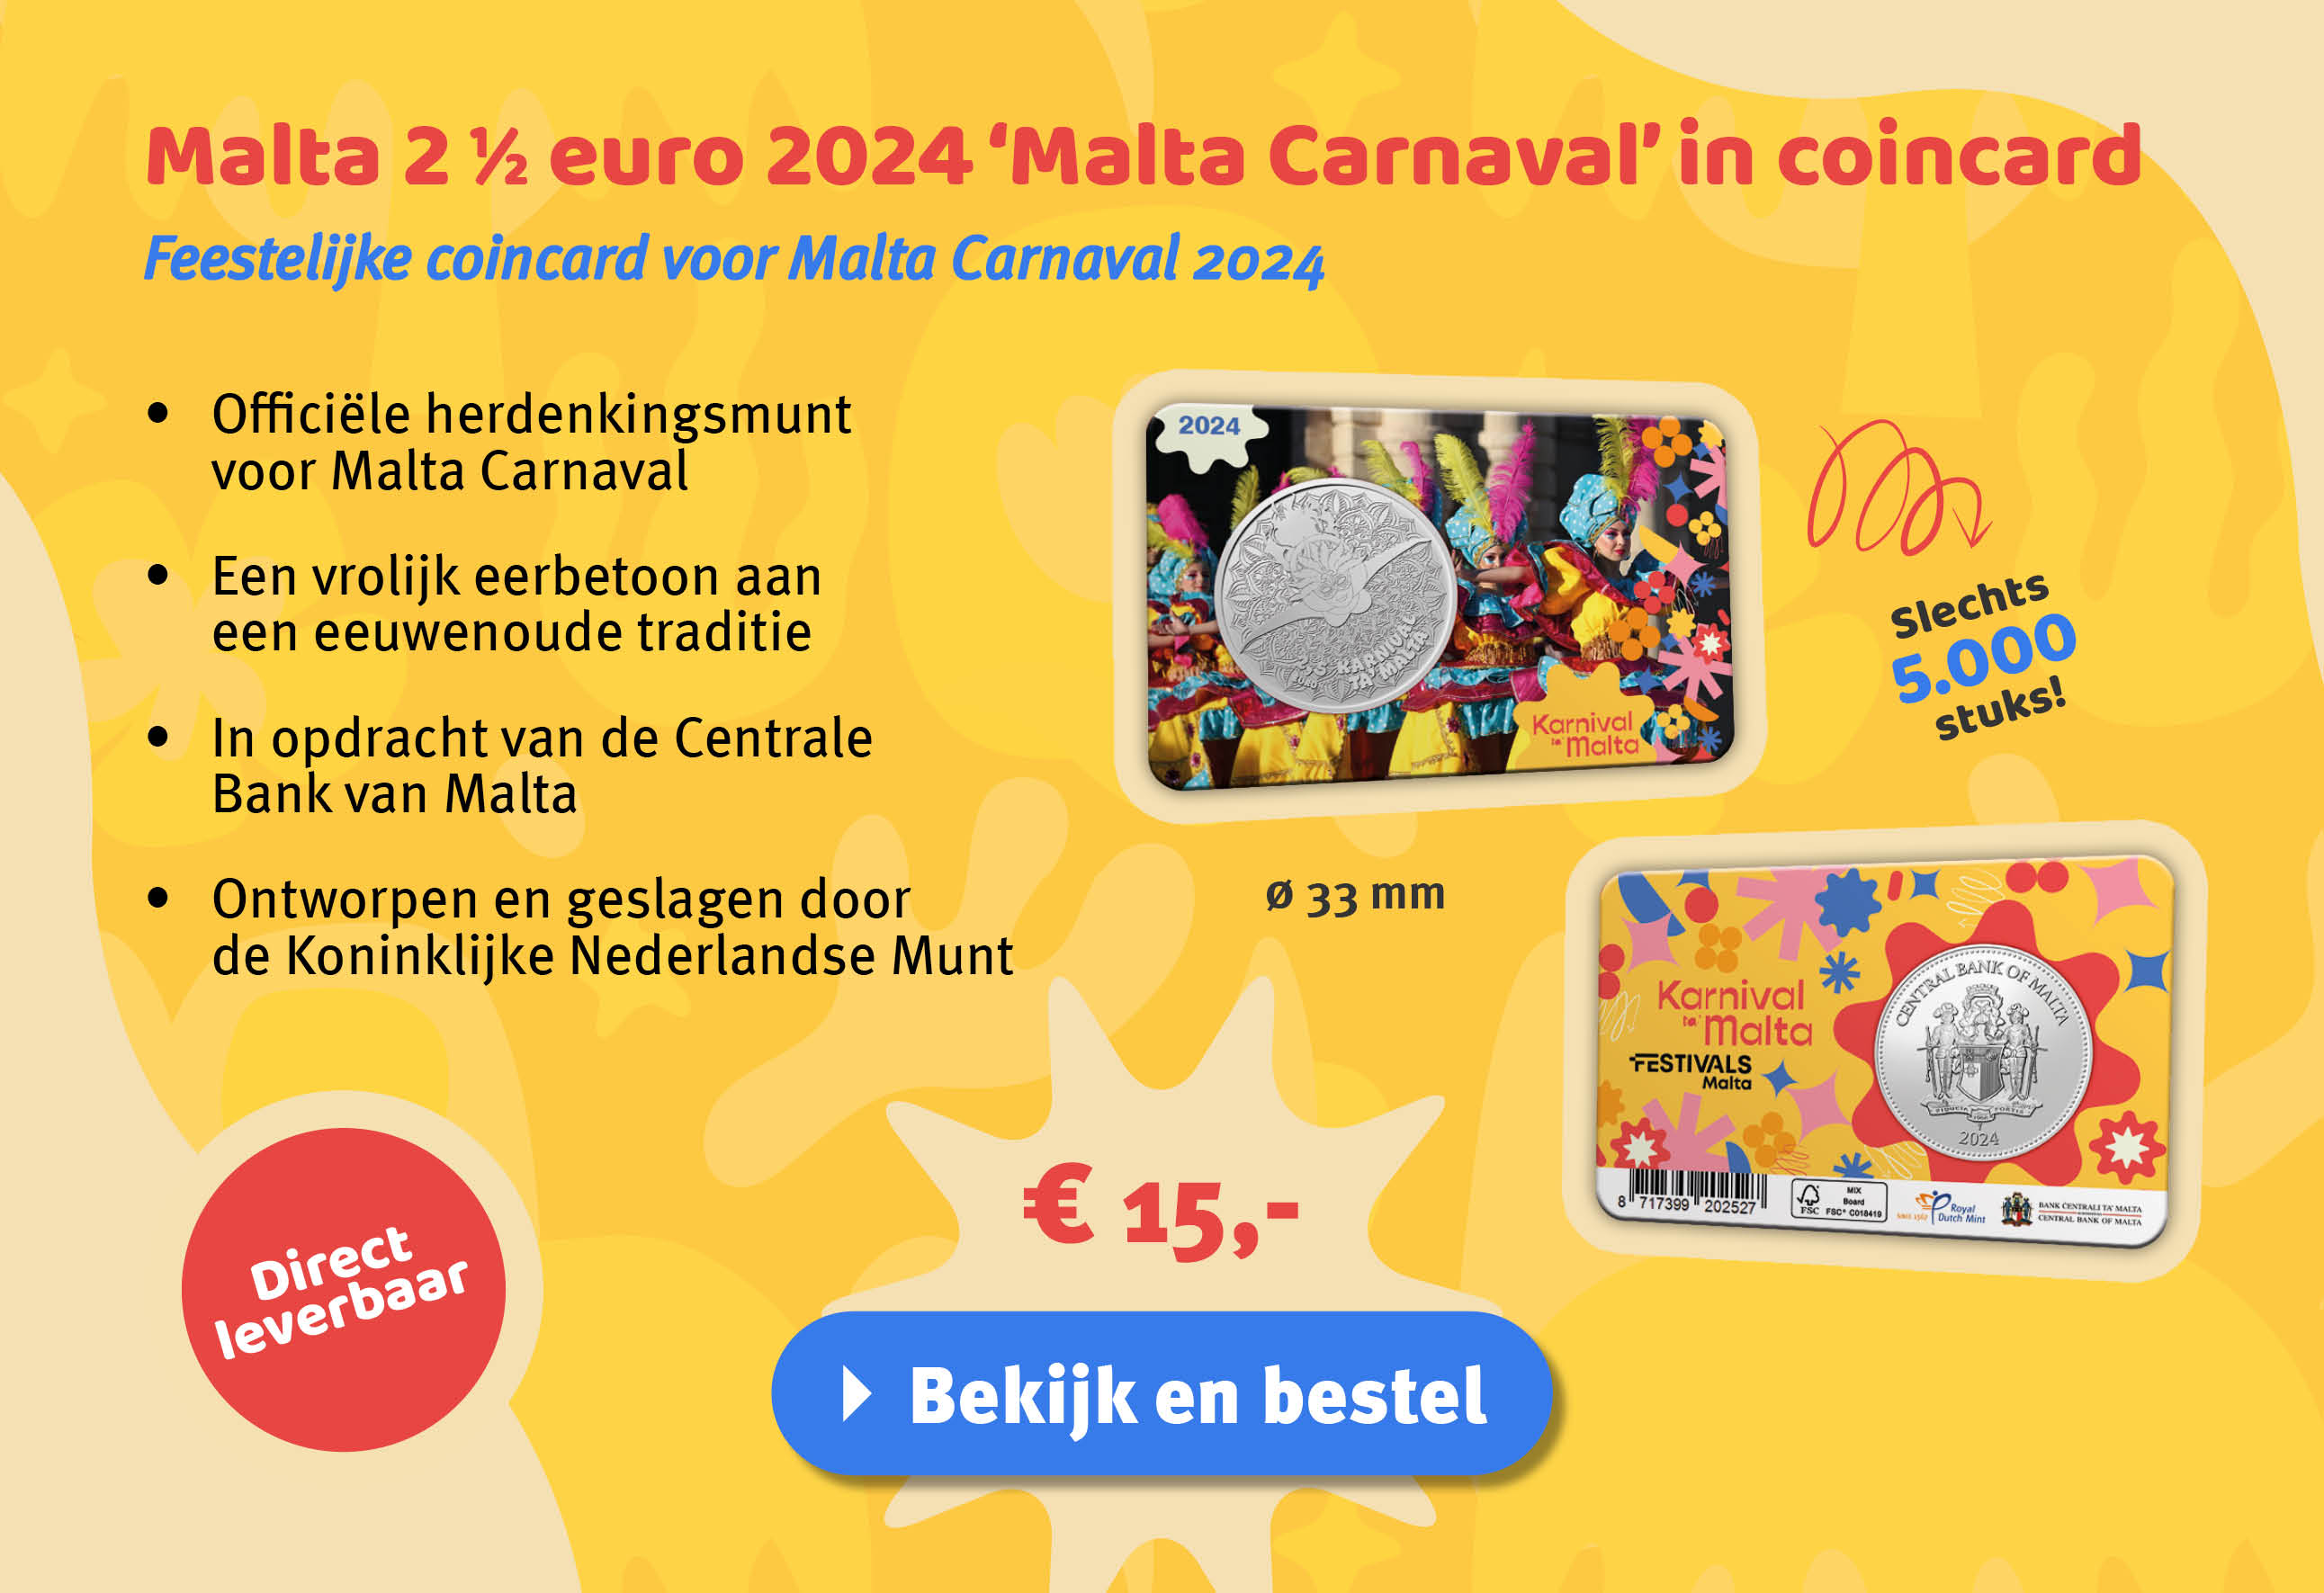 Bekijk en bestel: Malta 2,5 euro 2024 ‘Malta Carnaval’ in coincard